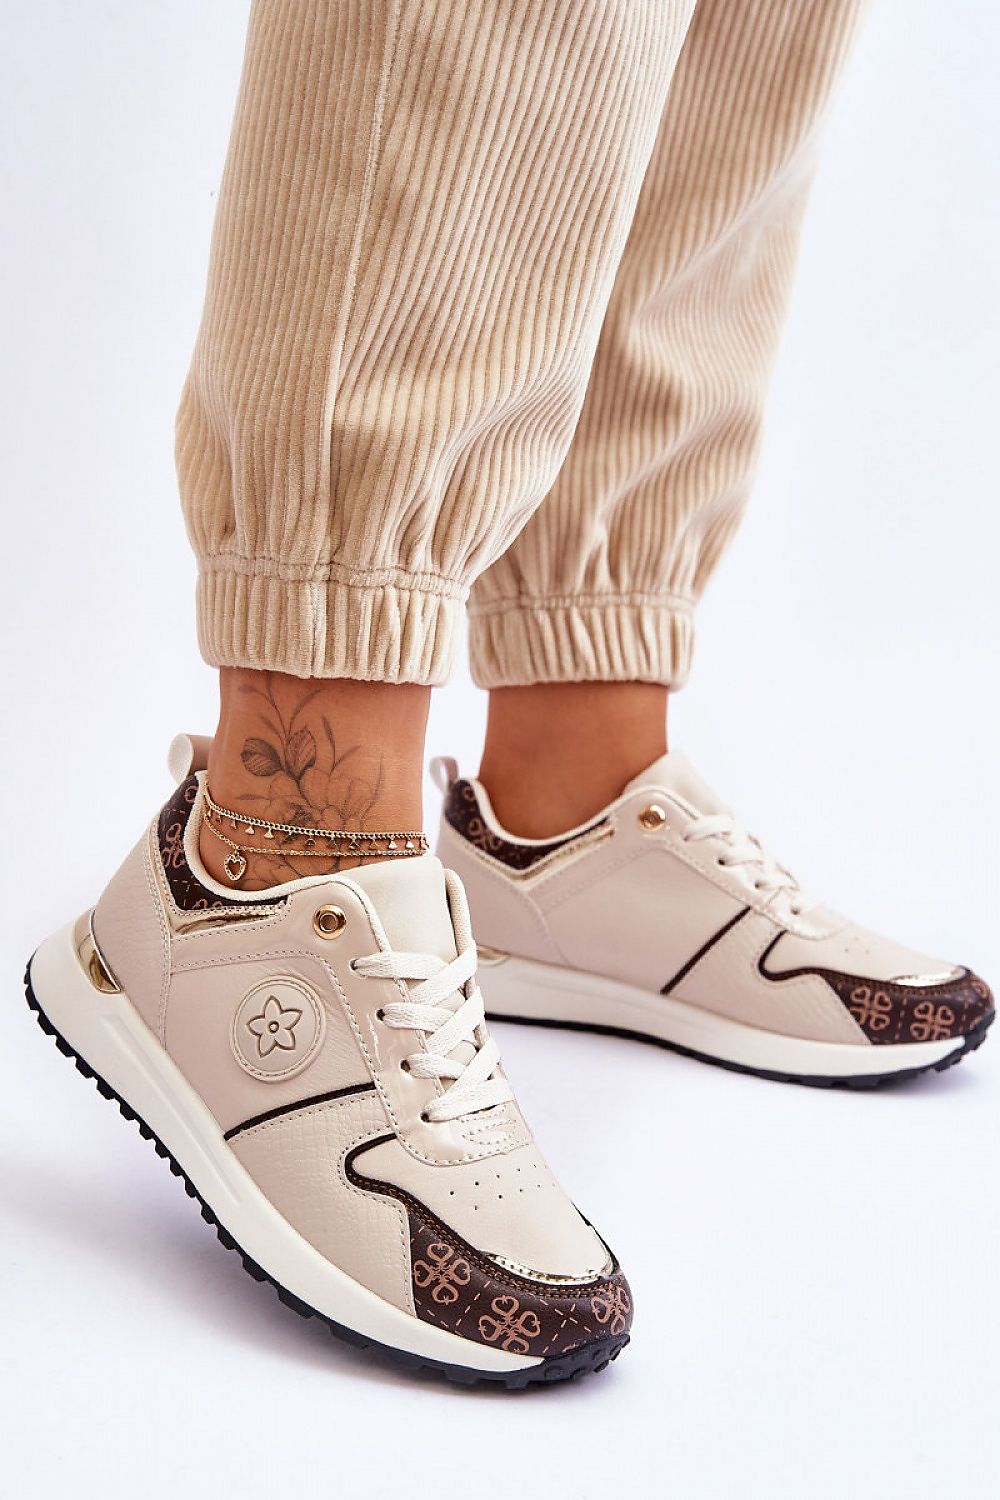 TEEK - Brown Earth Tone Laced Sneakers SHOES TEEK MH   